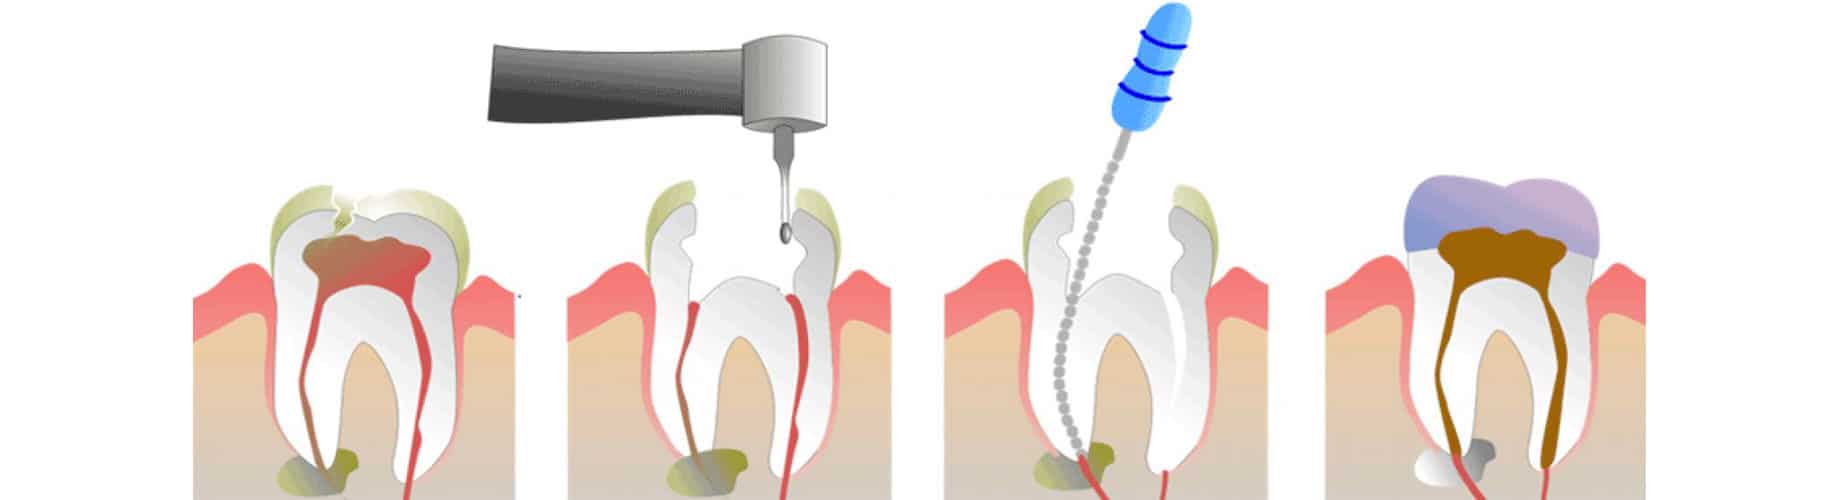 Endodonzia-testata